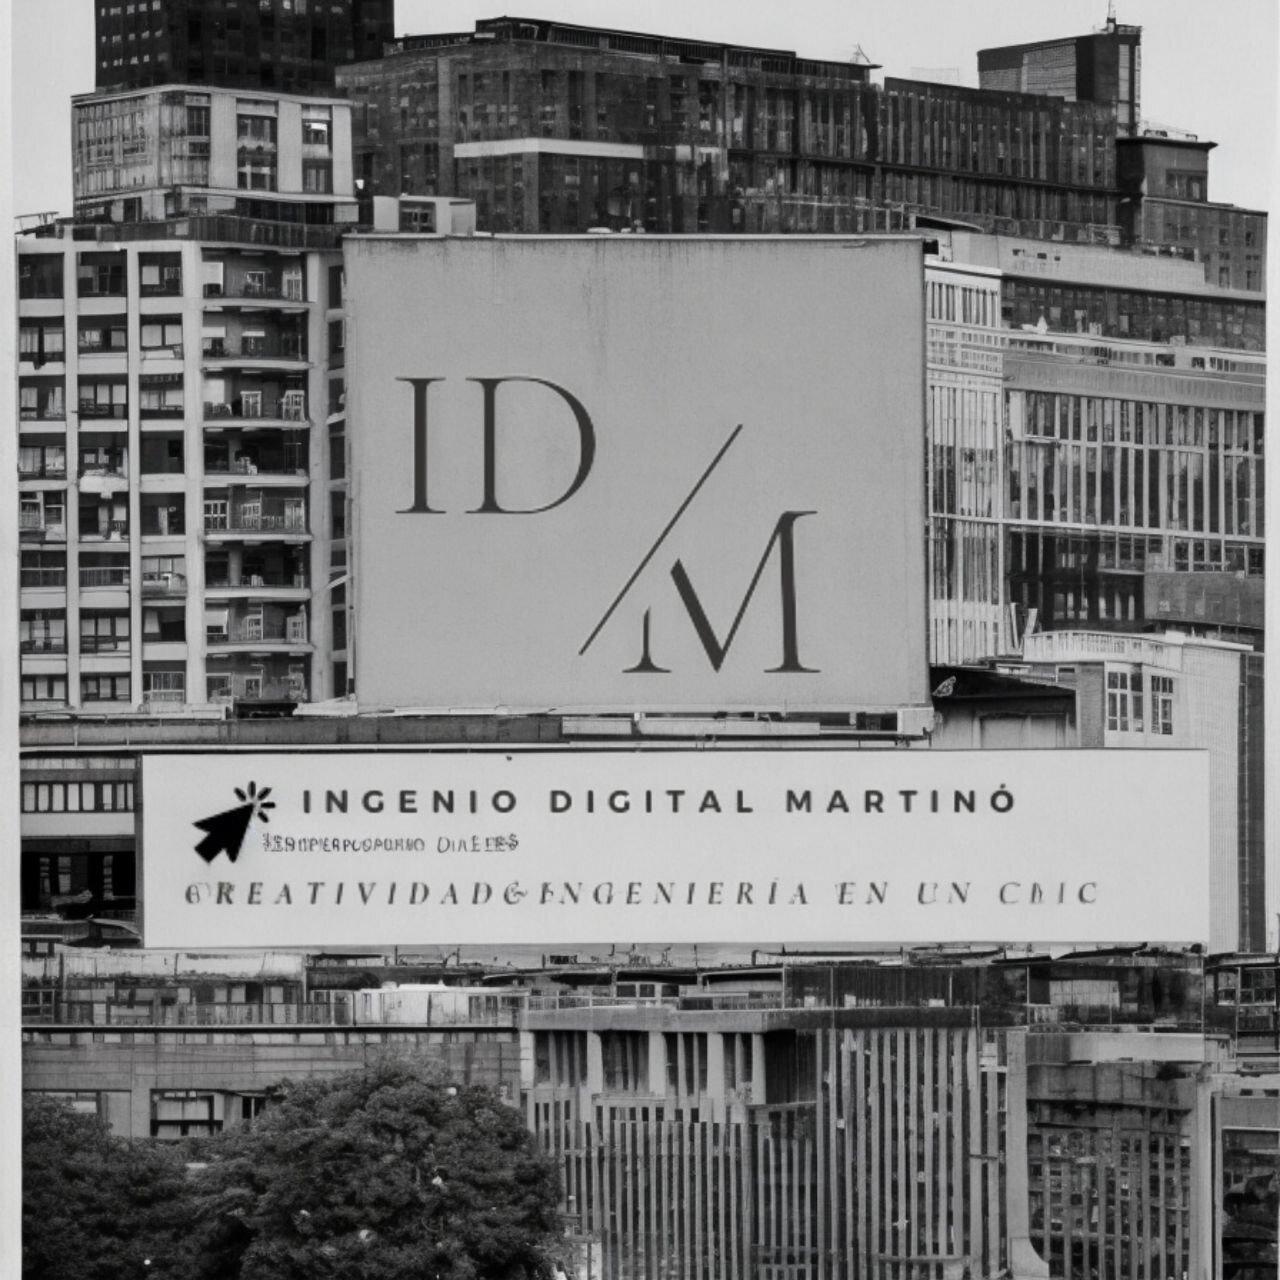 Ingenio Digital Martinó - Internet Marketing Service - Madrid - 613 85 37 17 Spain | ShowMeLocal.com